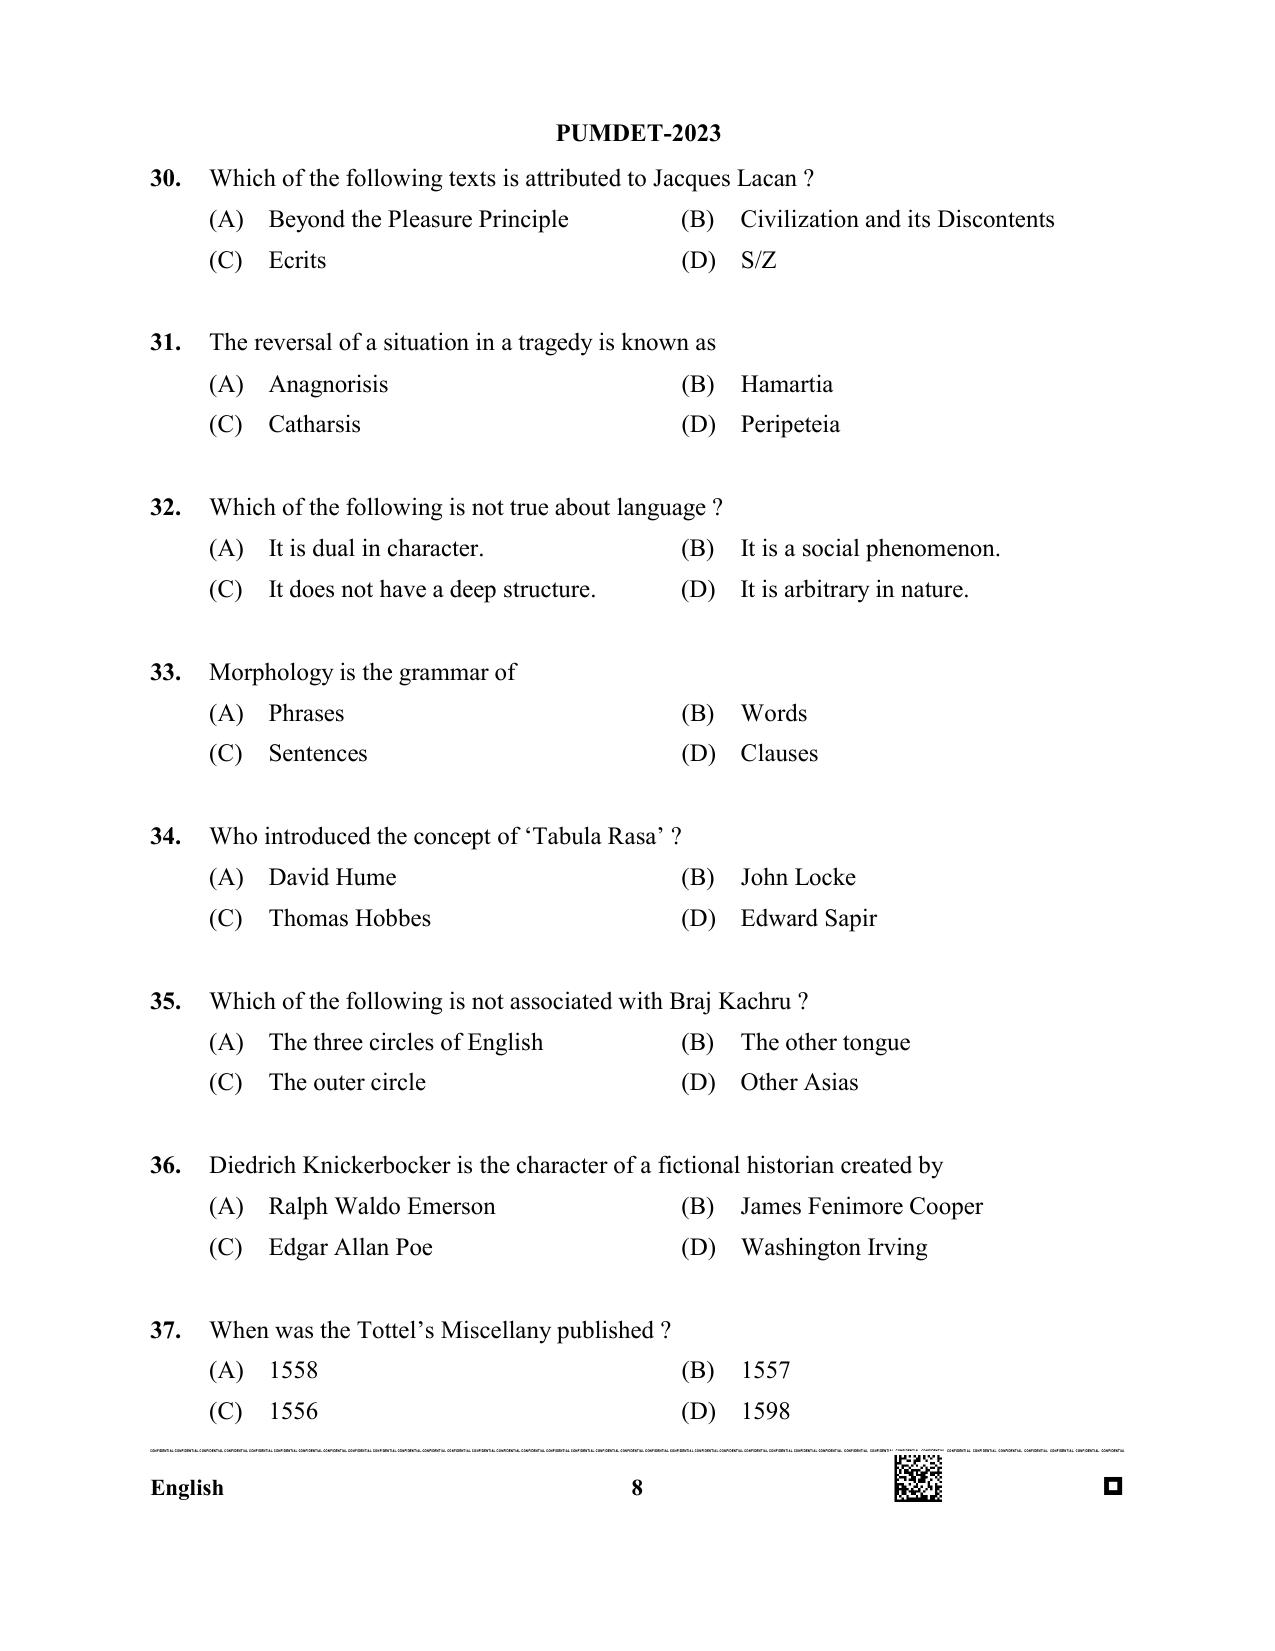 PUBDET 2023 English Question Paper - Page 8